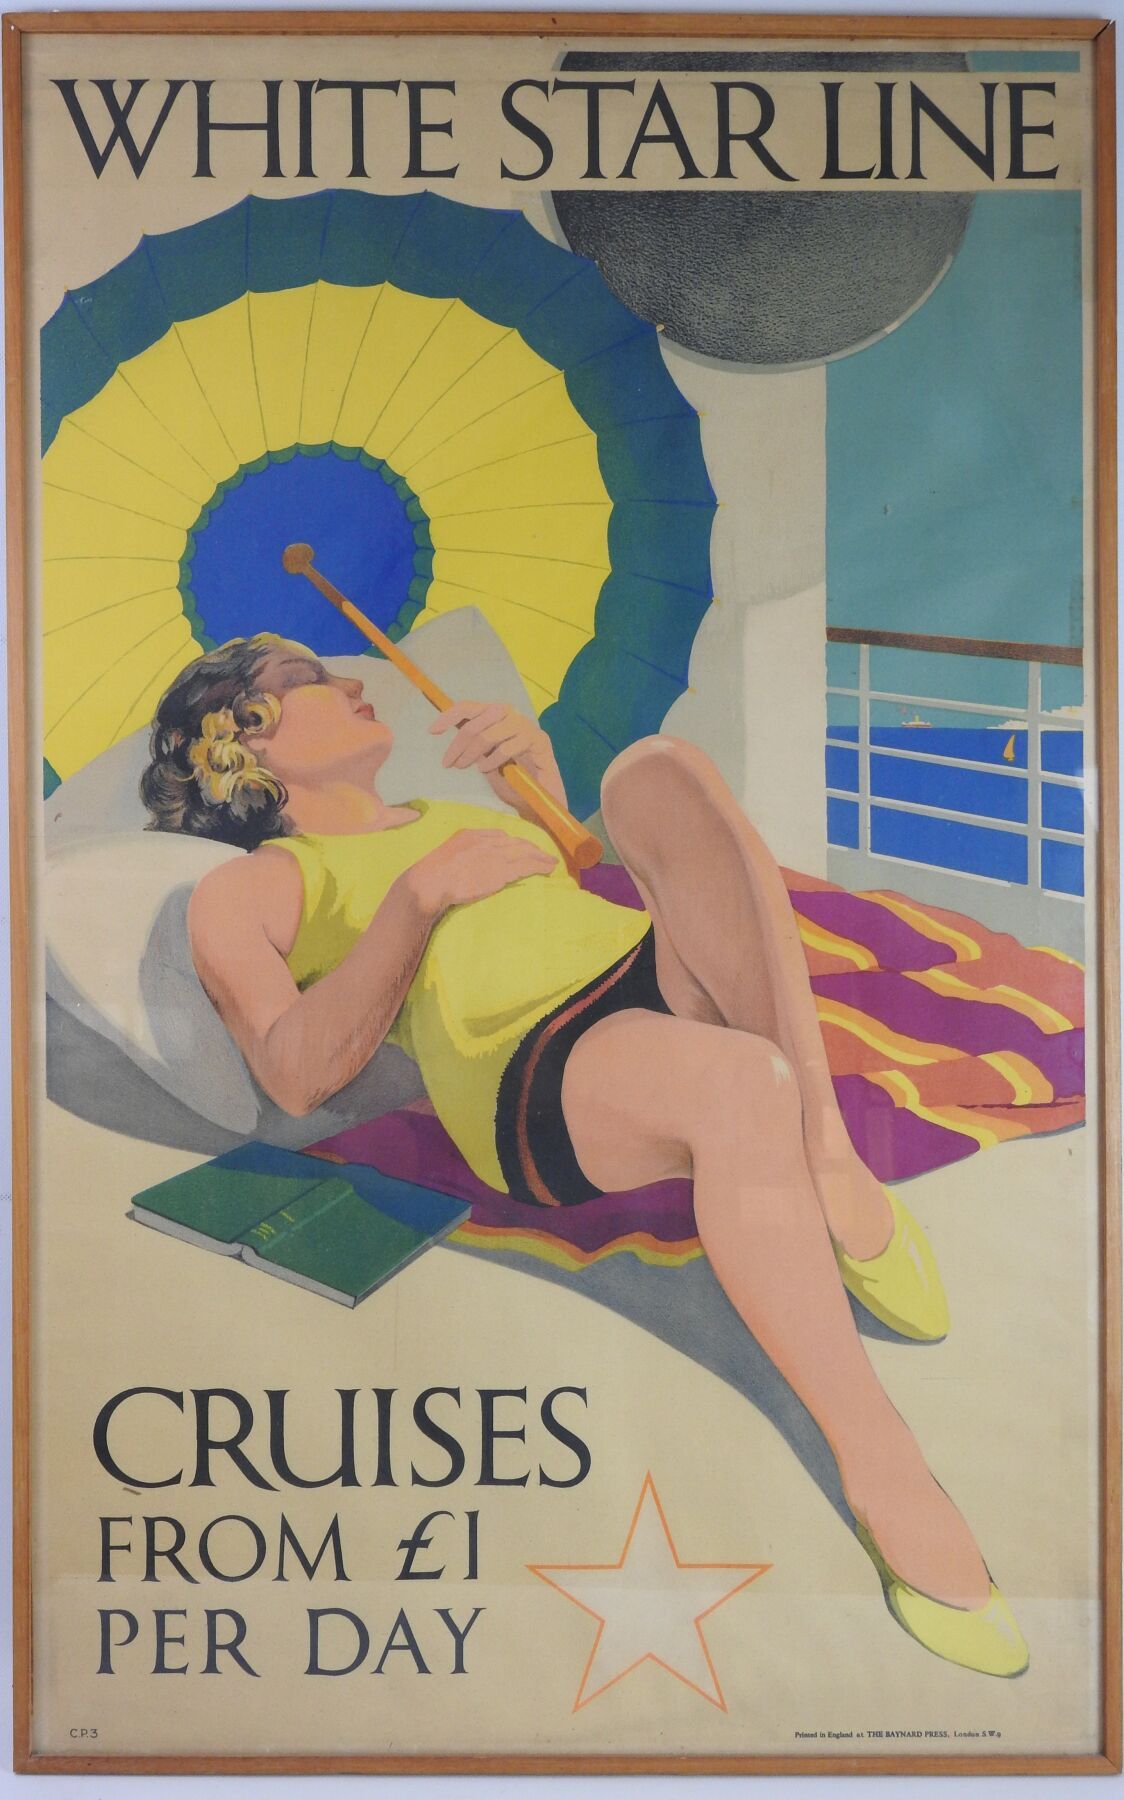 Null 白星航线：每天有1次以上的巡航。彩色海报由伦敦的Baynard出版社印刷，尺寸为99x63cm。在玻璃下装裱。